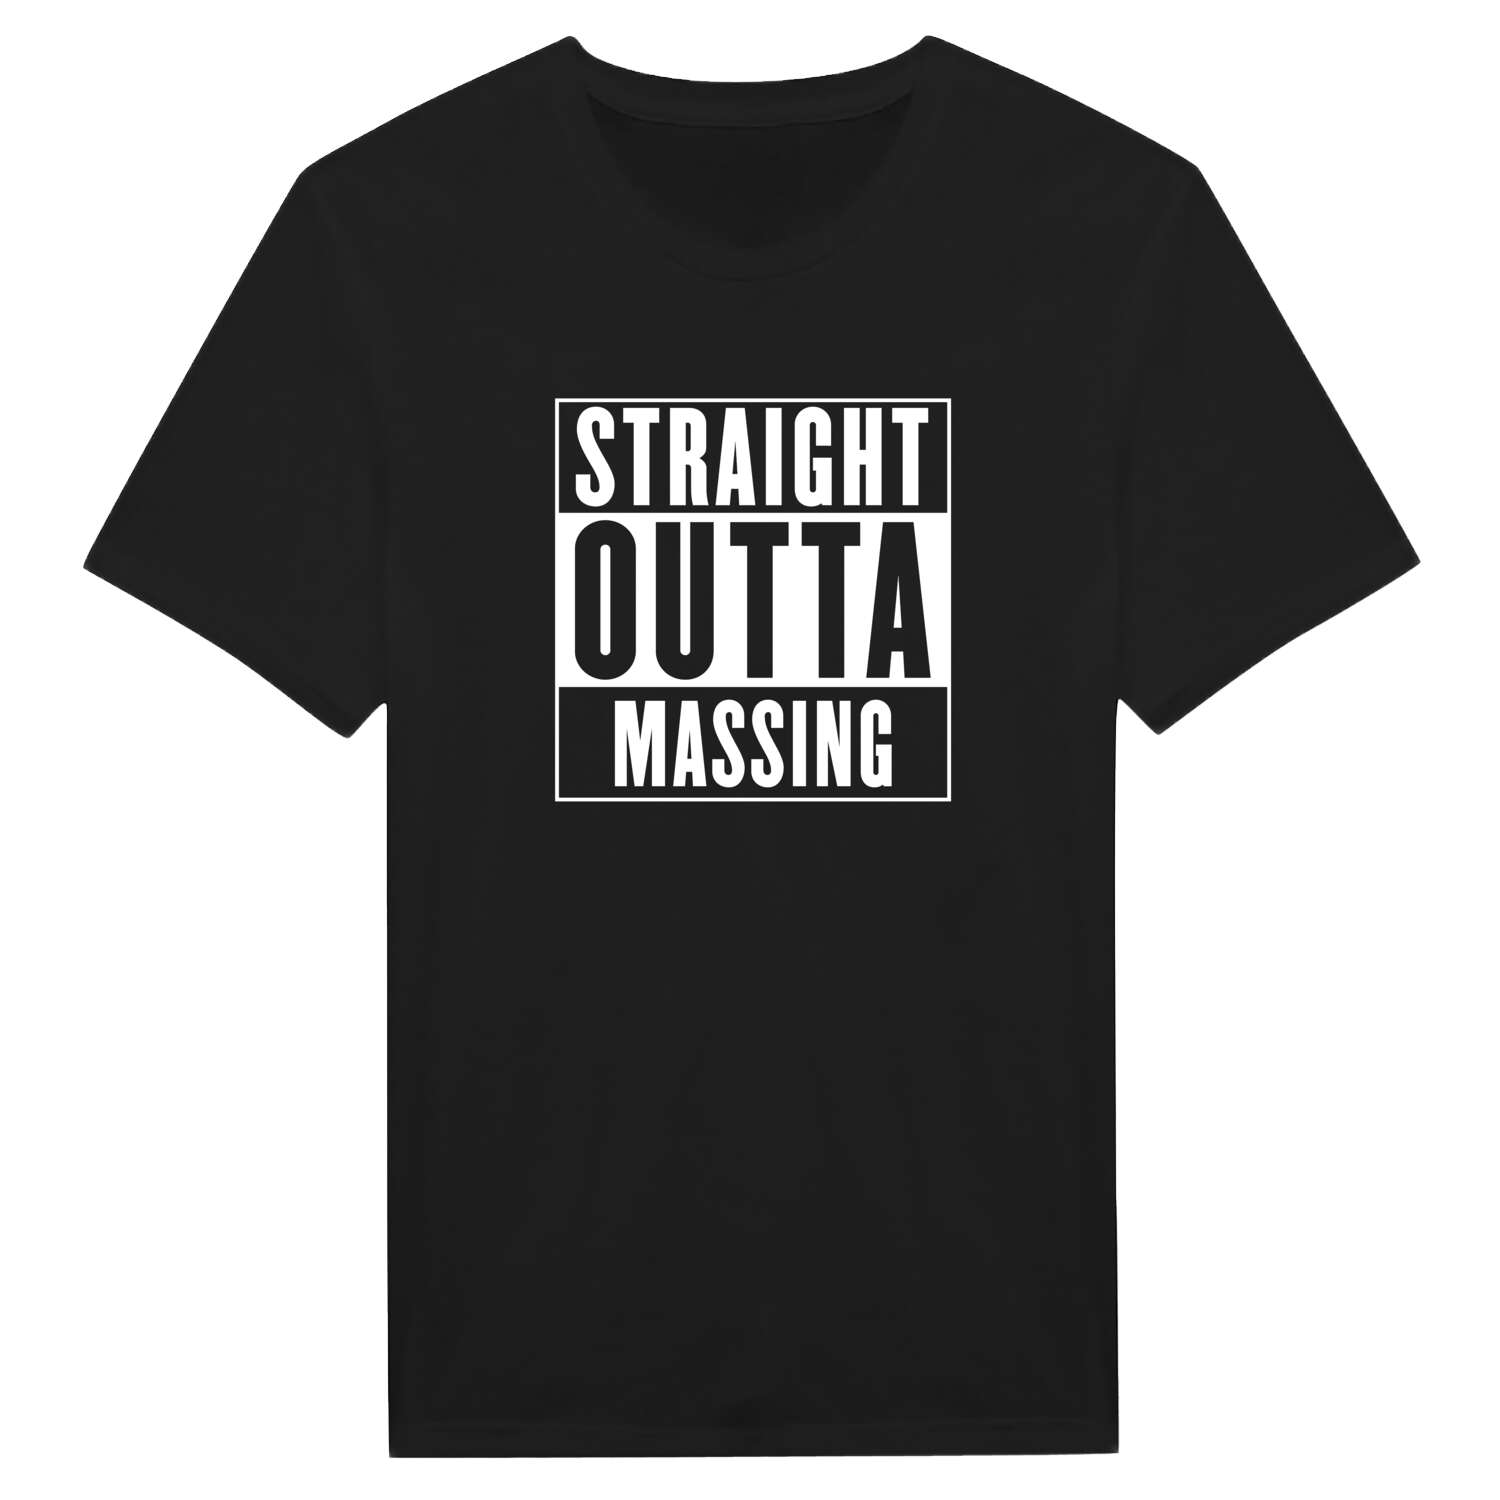 Massing T-Shirt »Straight Outta«